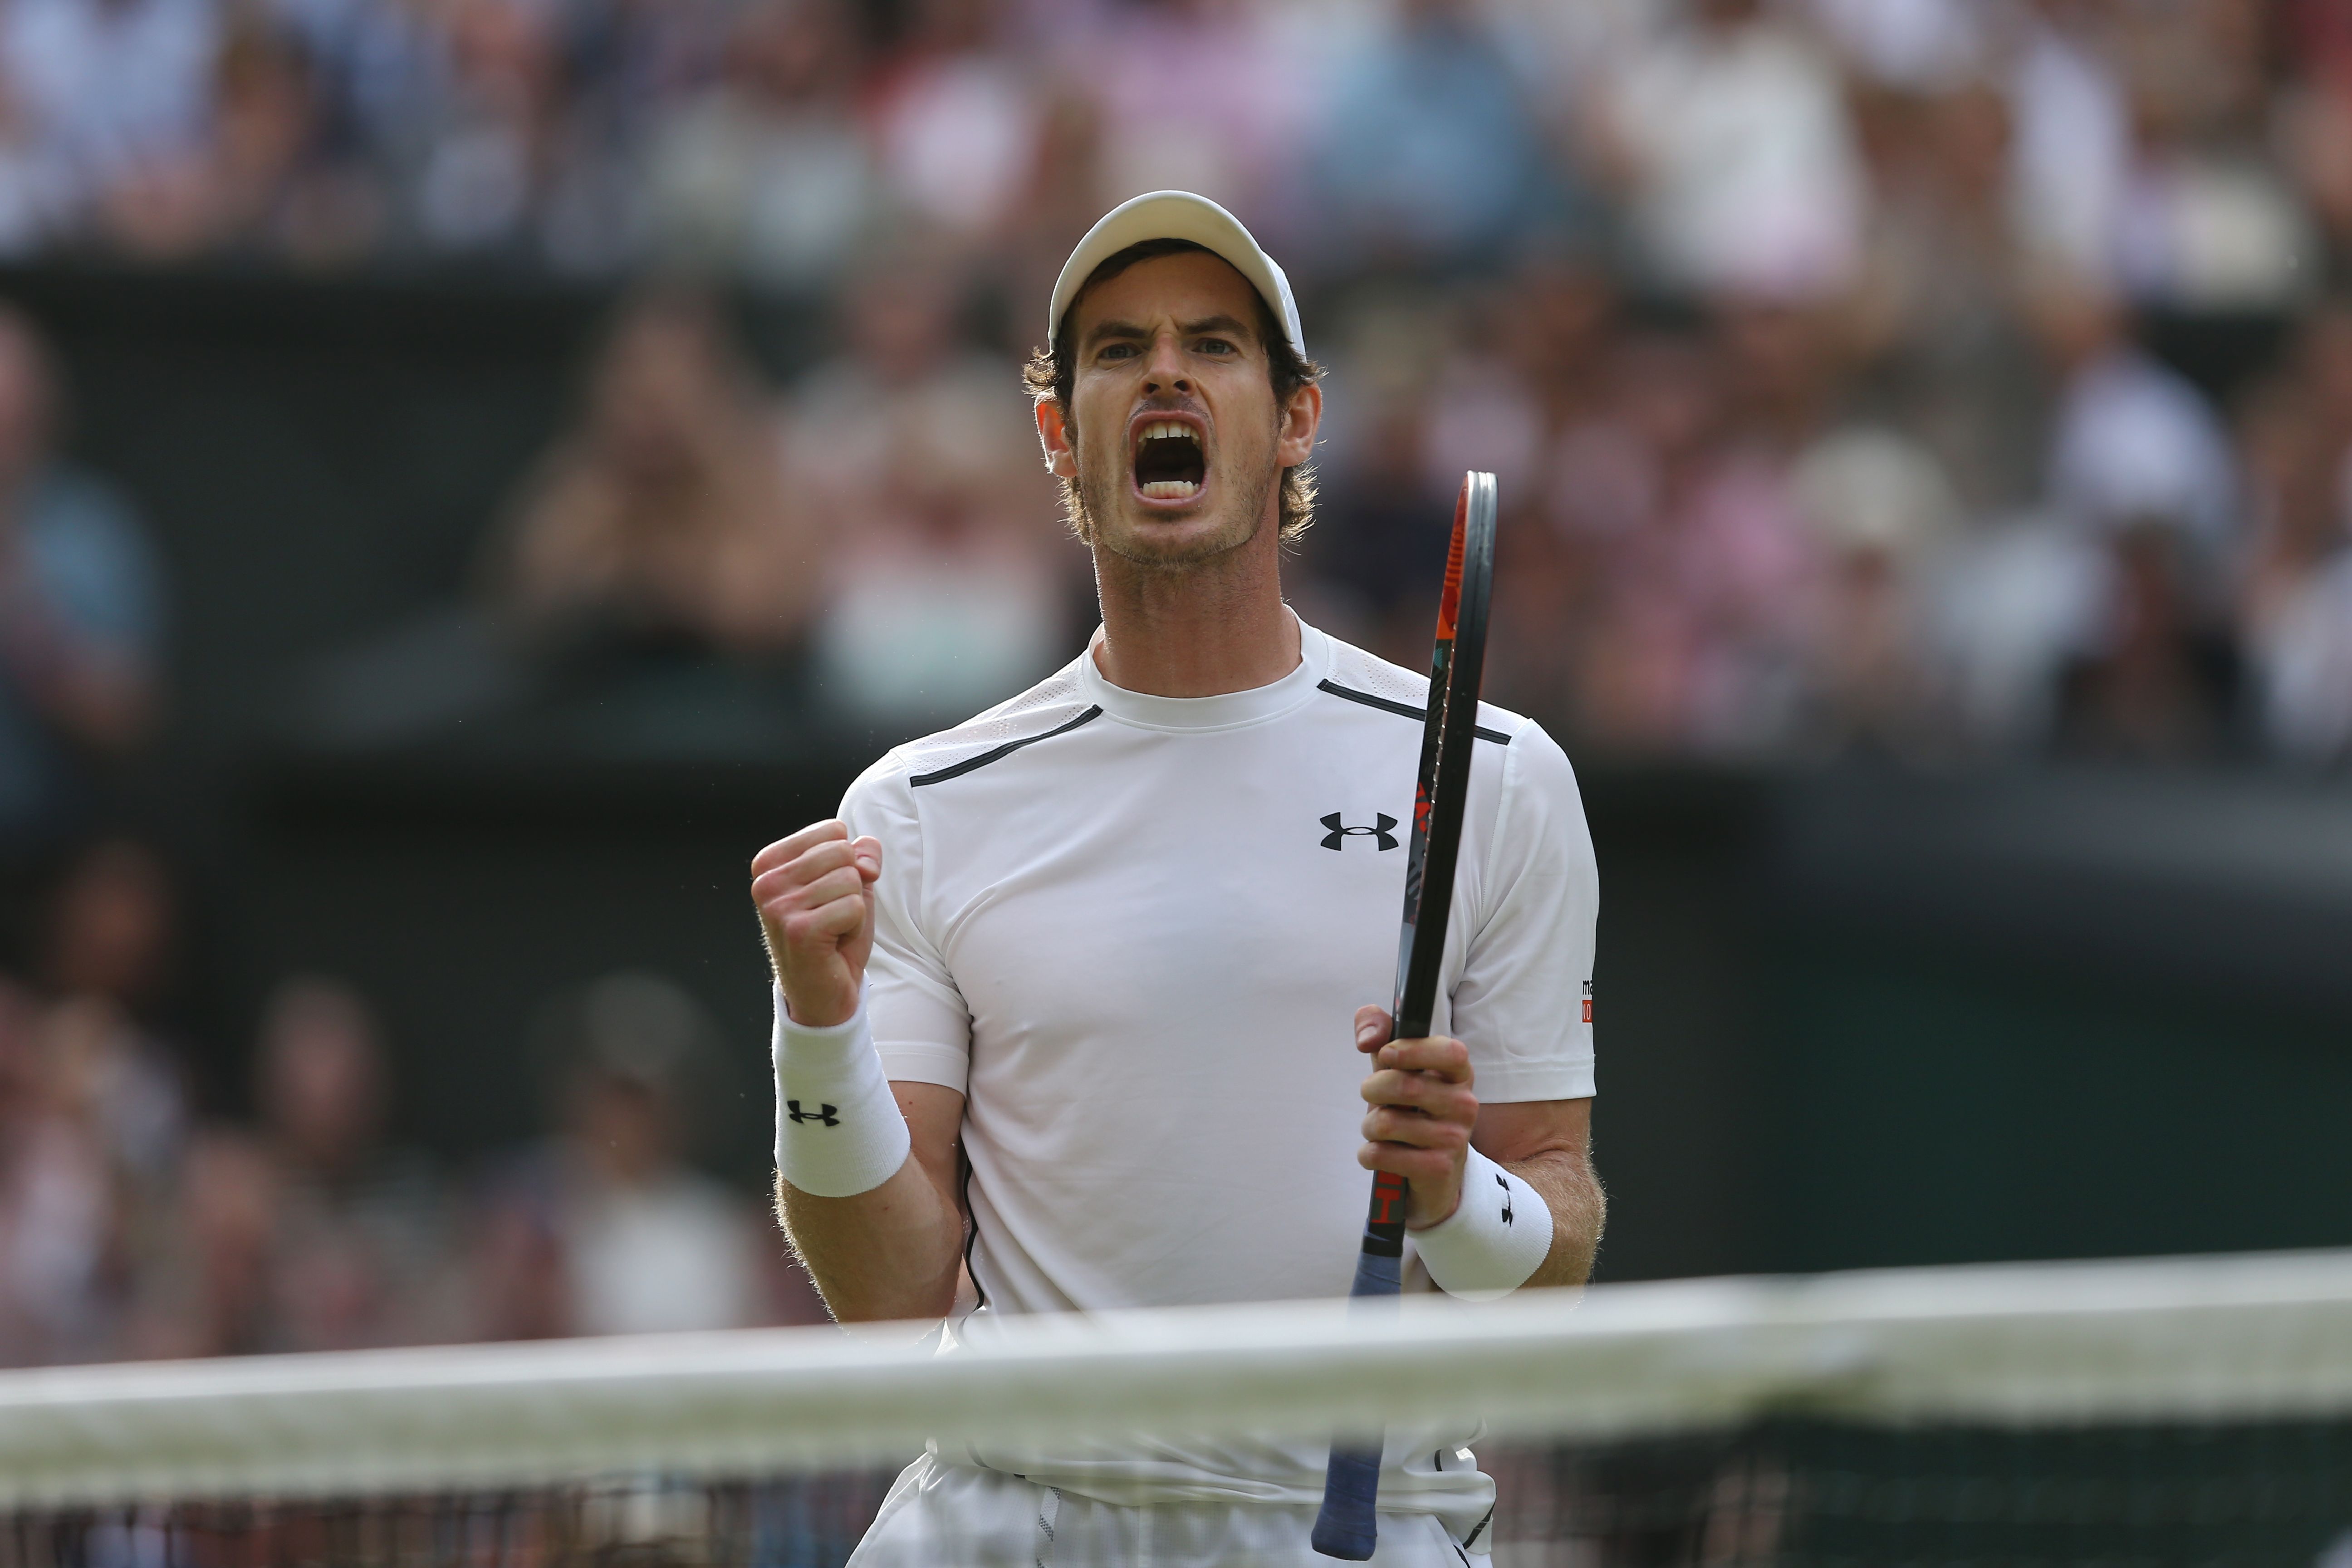 Tennis: Murray etching his name among grasscourt greats